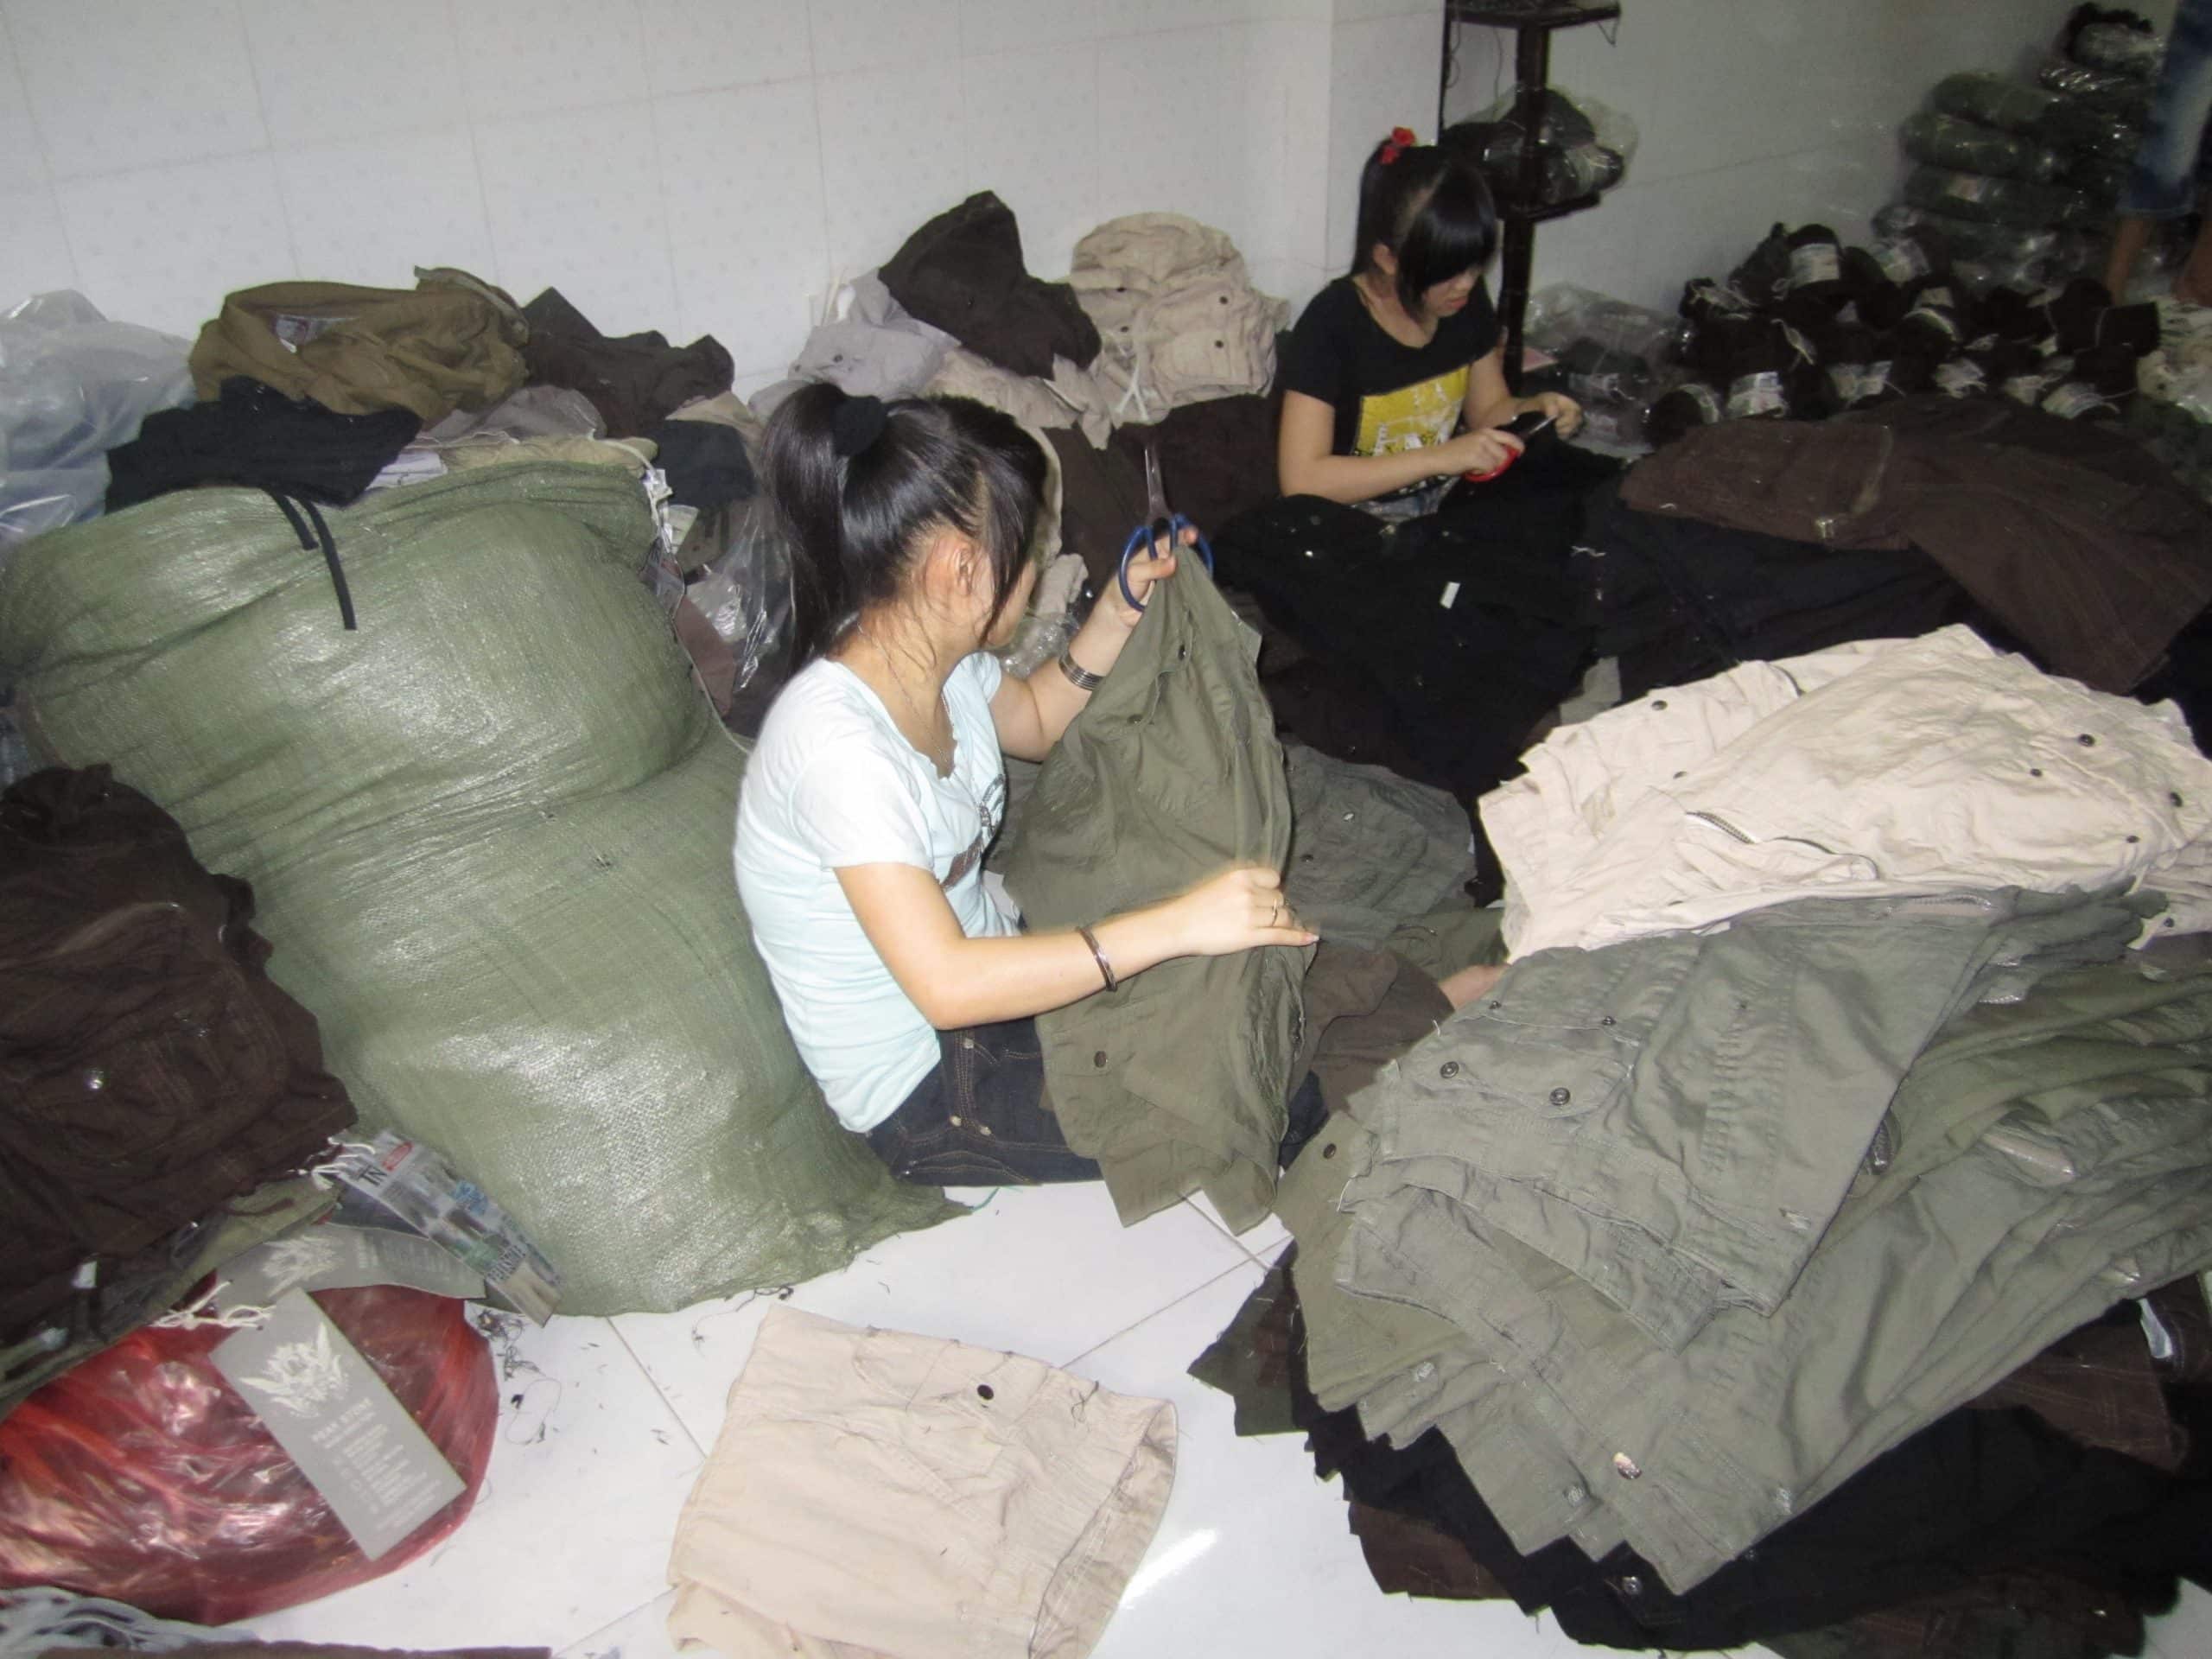 Piles of garments